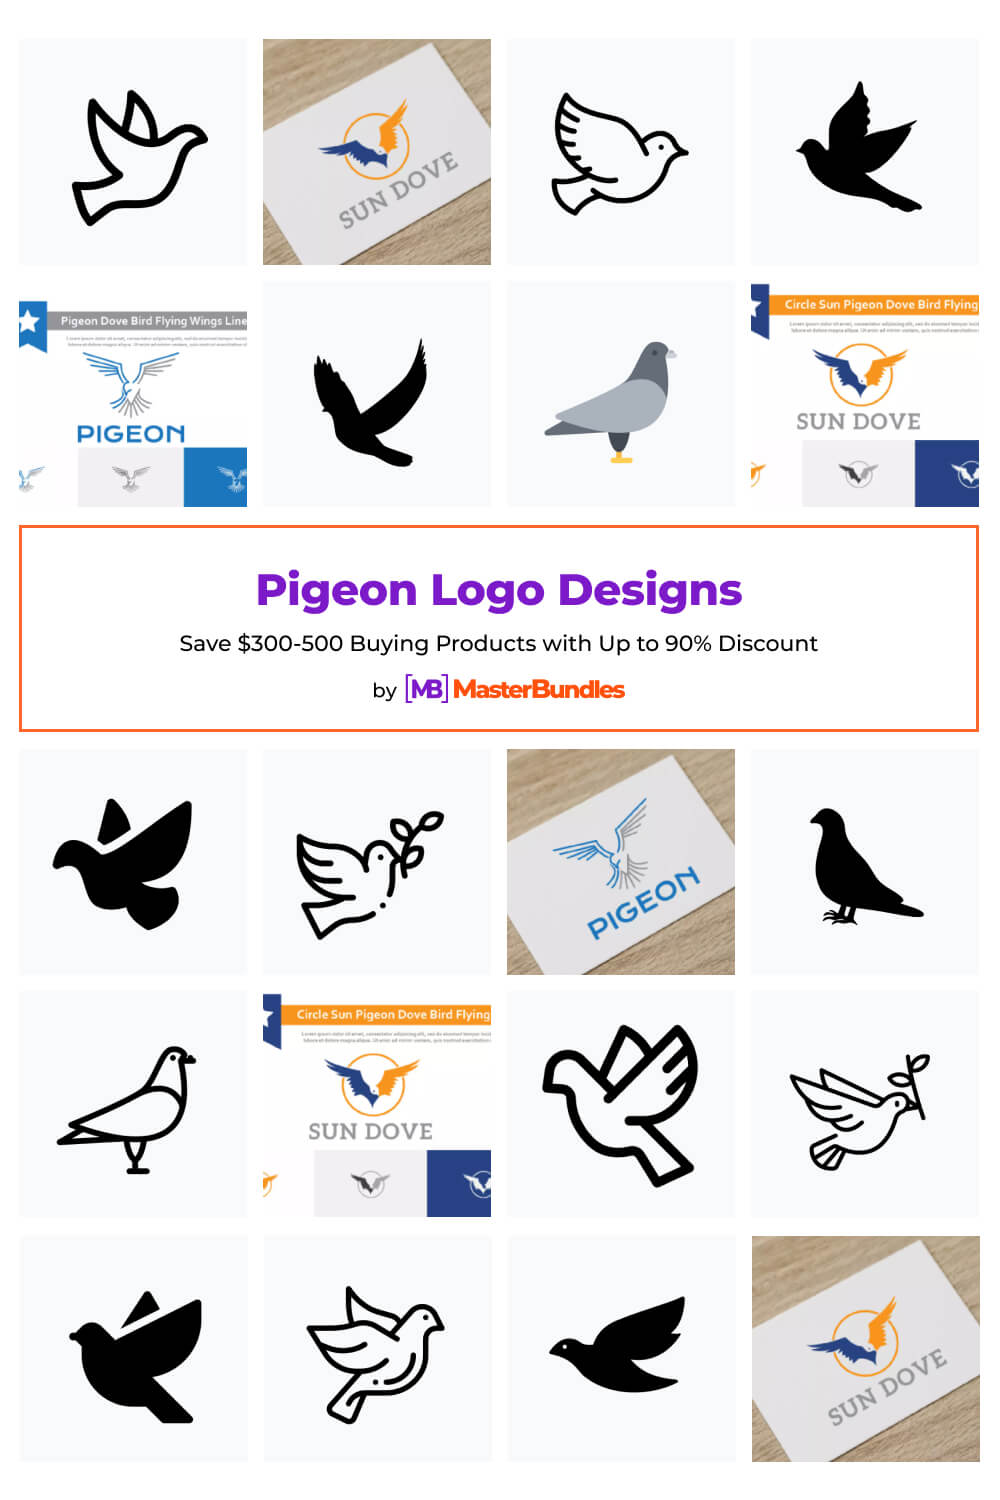 pigeon logo designs pinterest image.